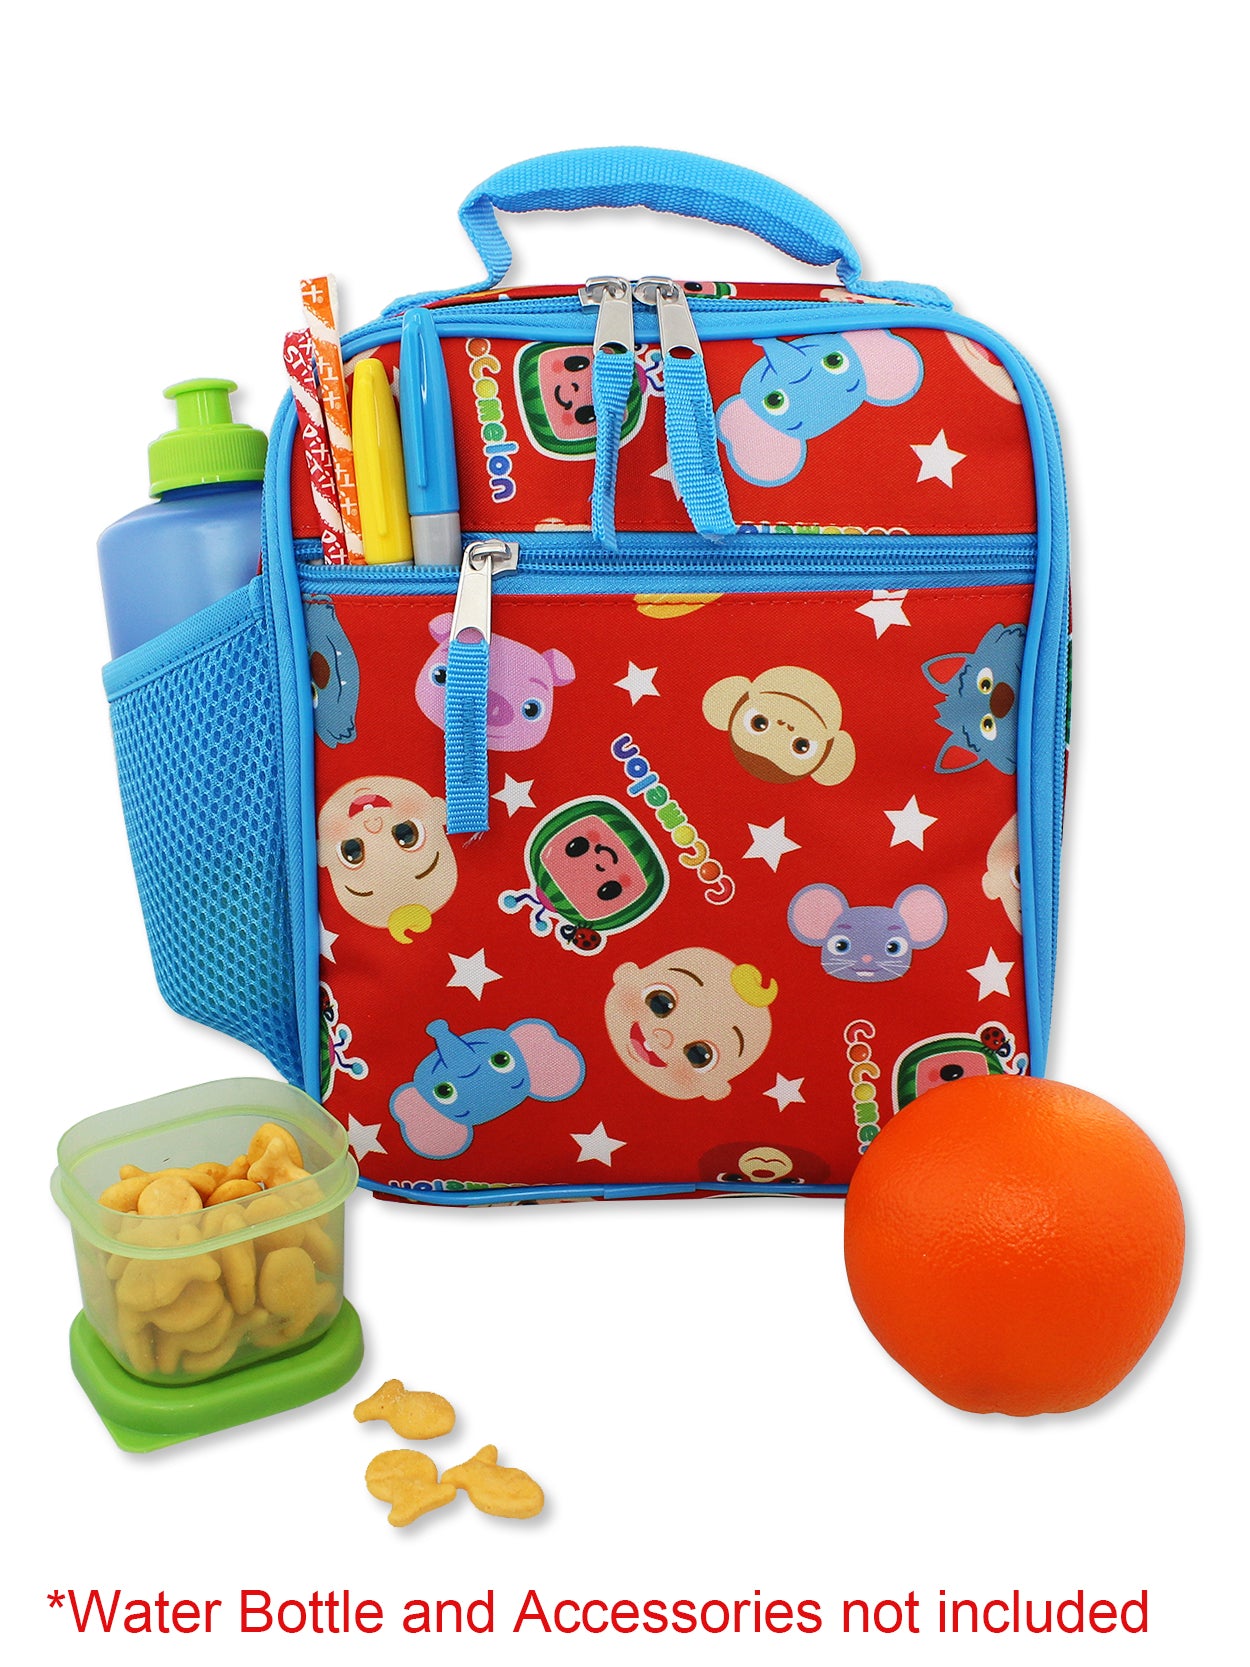 Cocomelon Childrens/Kids Baby JJ Lunch Bag Set